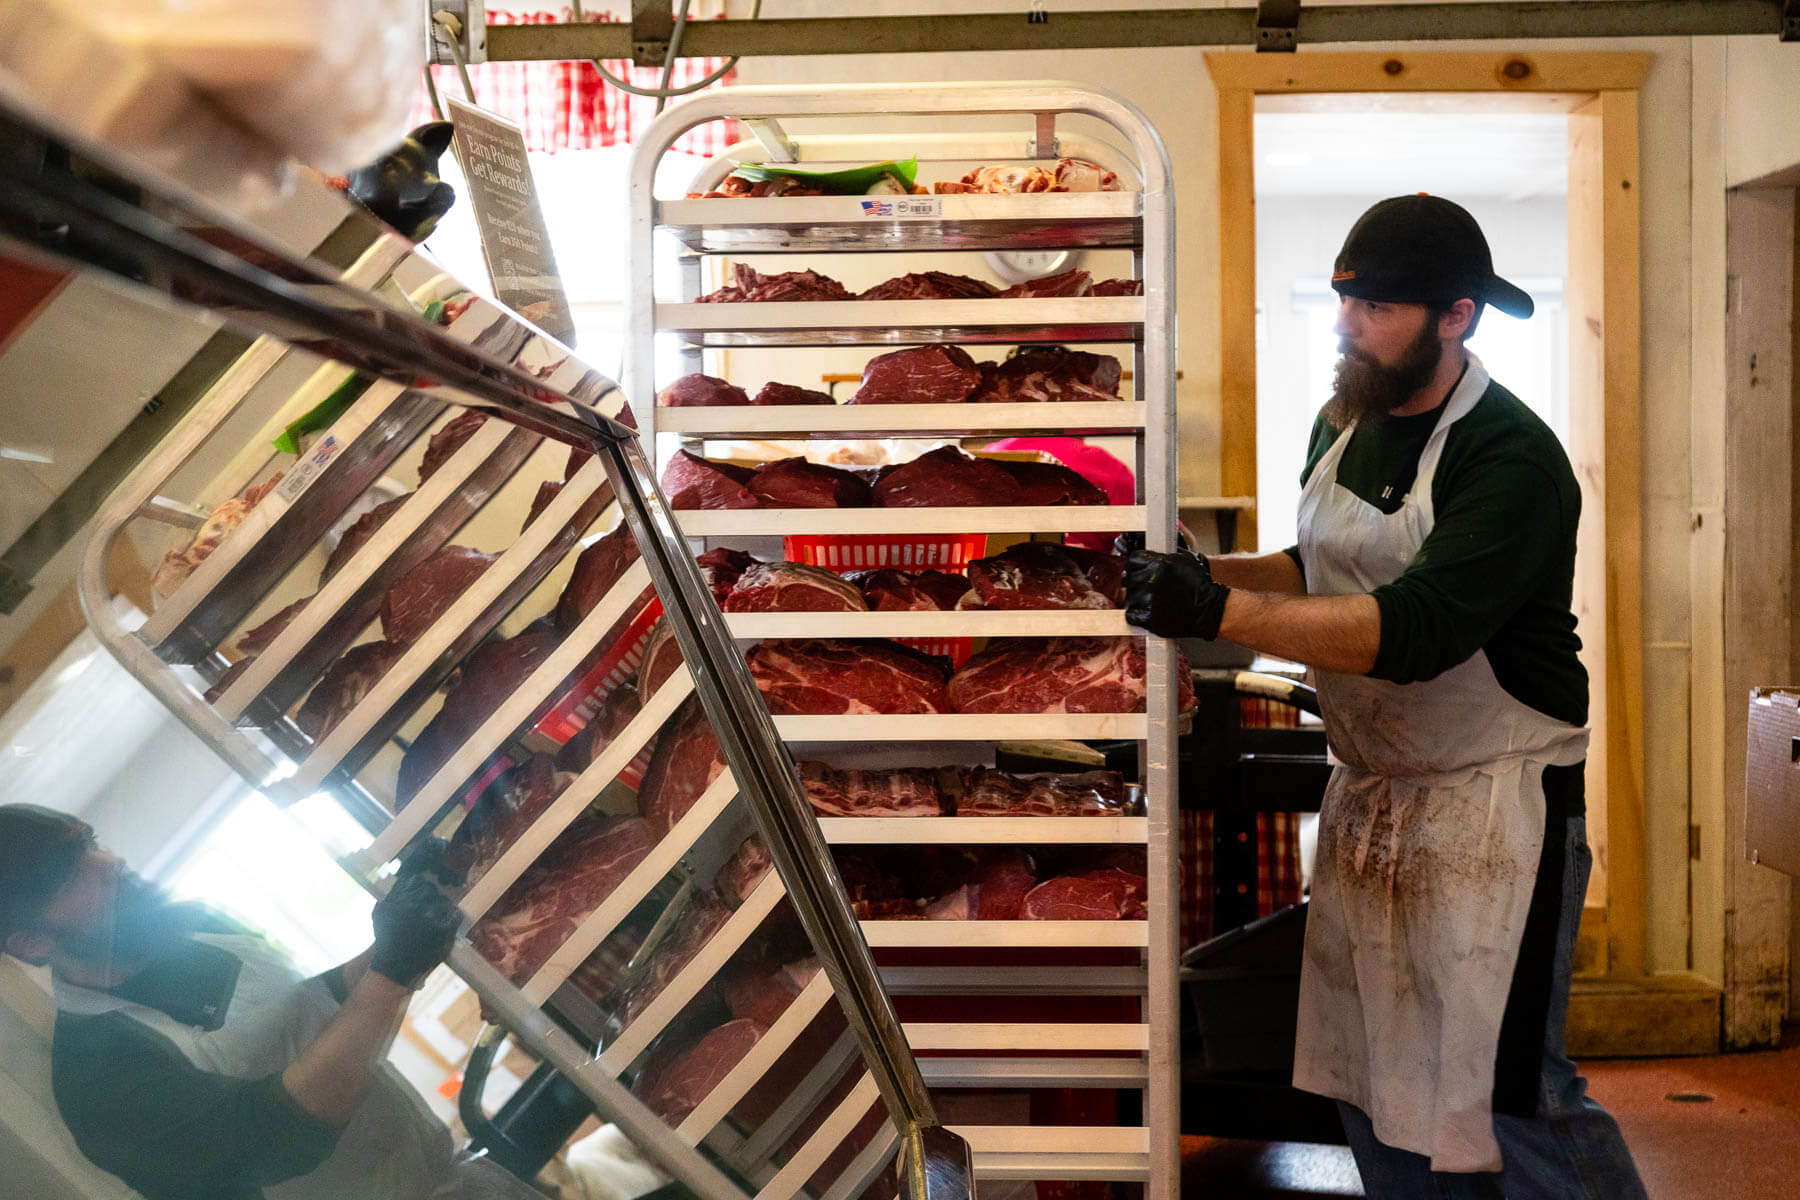 Man pushes cart of cut meats